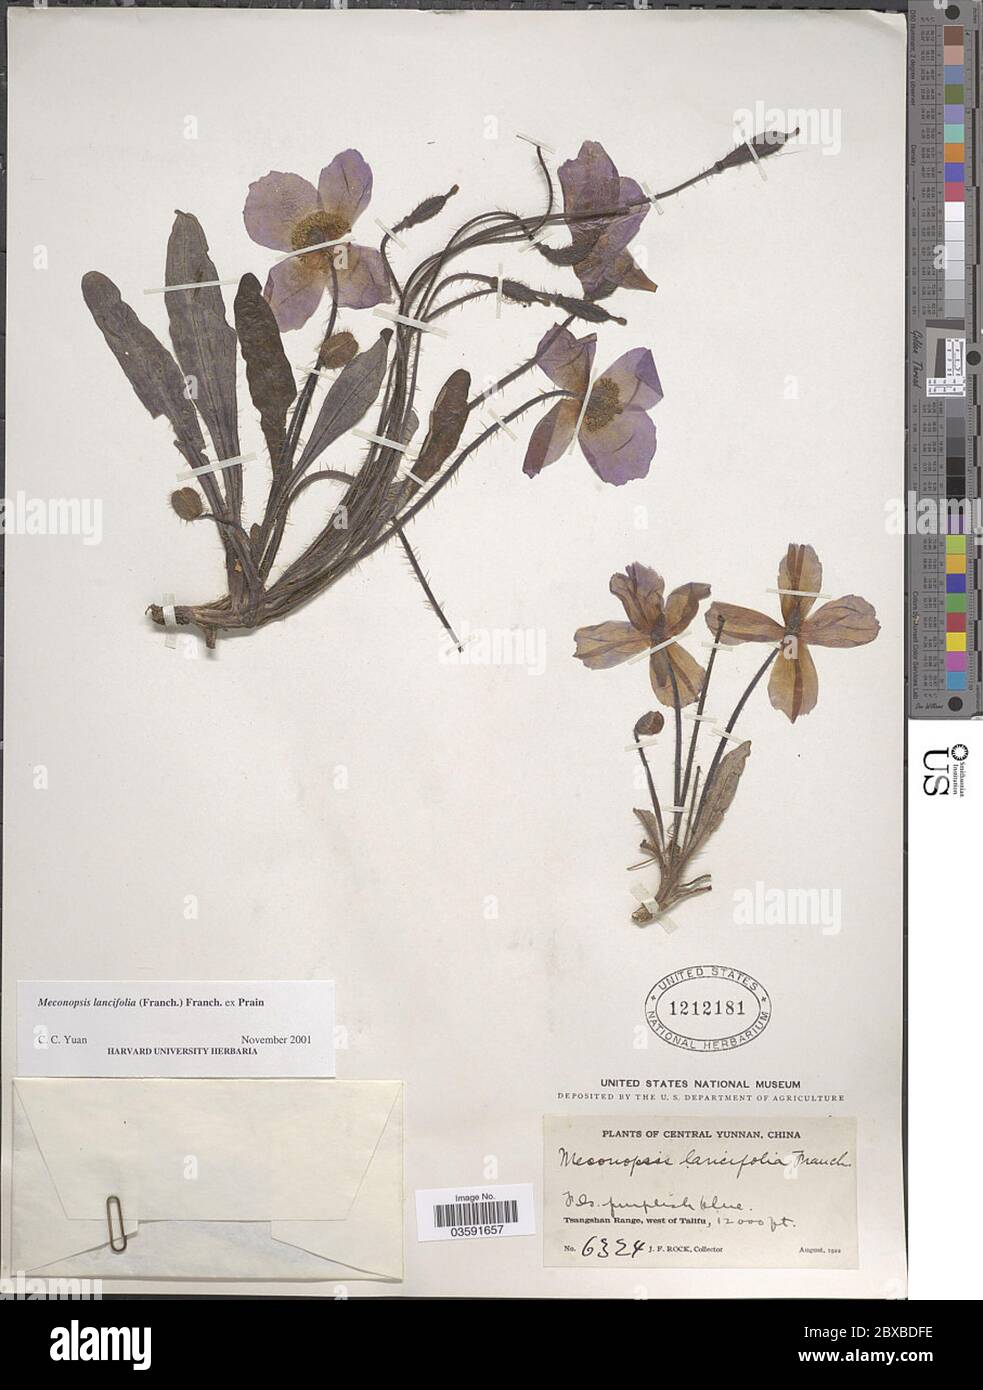 Meconopsis lancifolia Franch ex Prain Meconopsis lancifolia Franch ex Prain. Stock Photo